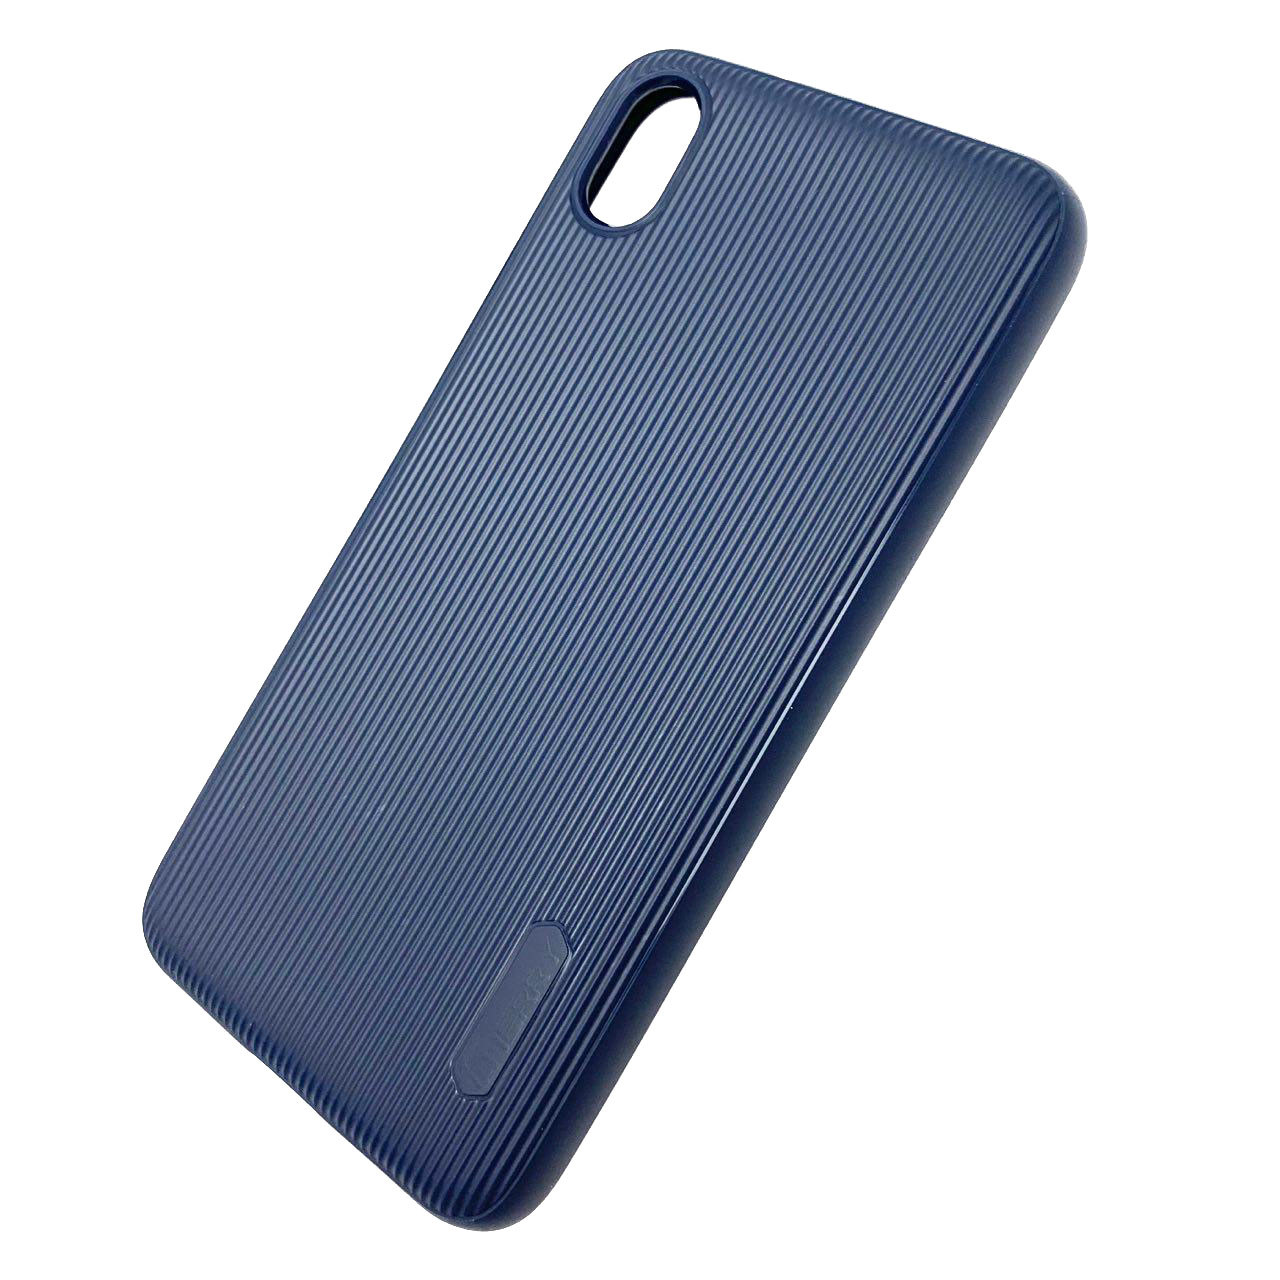 Чехол накладка для XIAOMI Redmi 7A, силикон, полоски, цвет темно синий.